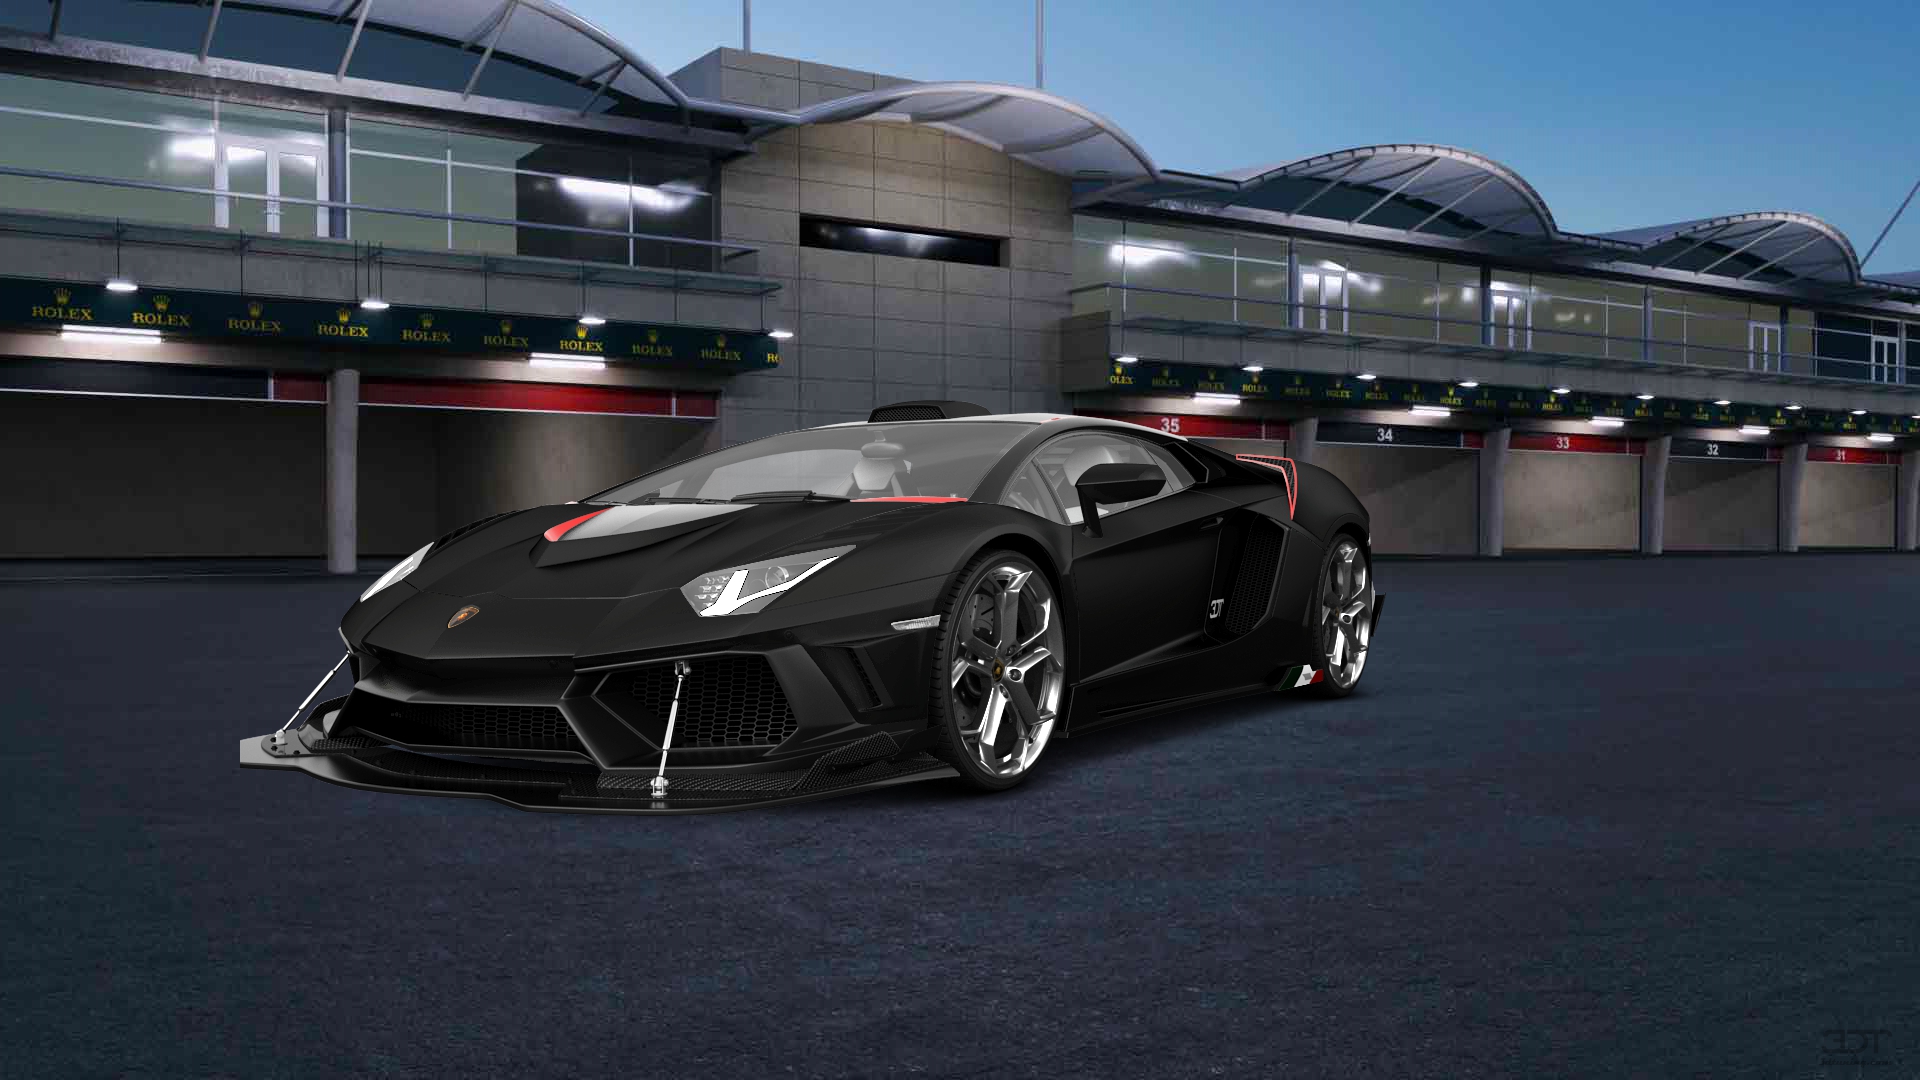 Lamborghini Aventador challenge 2 Door Coupe 4012